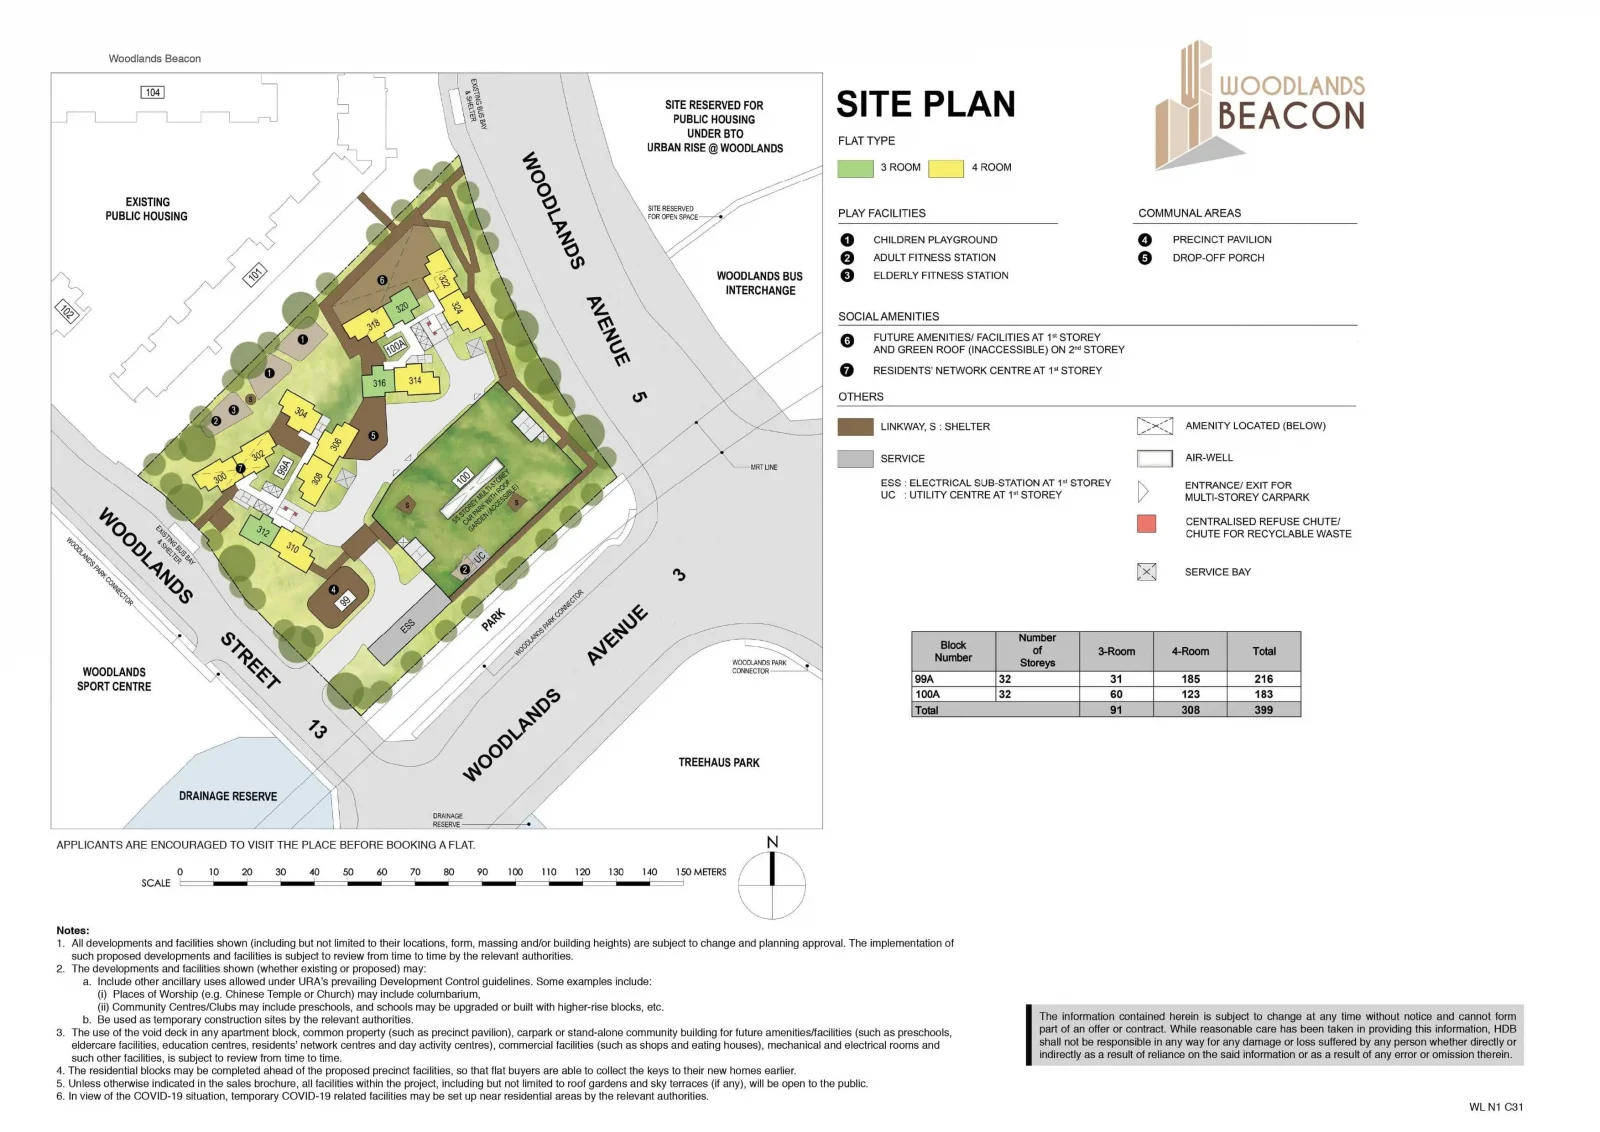 Woodlands Beacon Site Plan